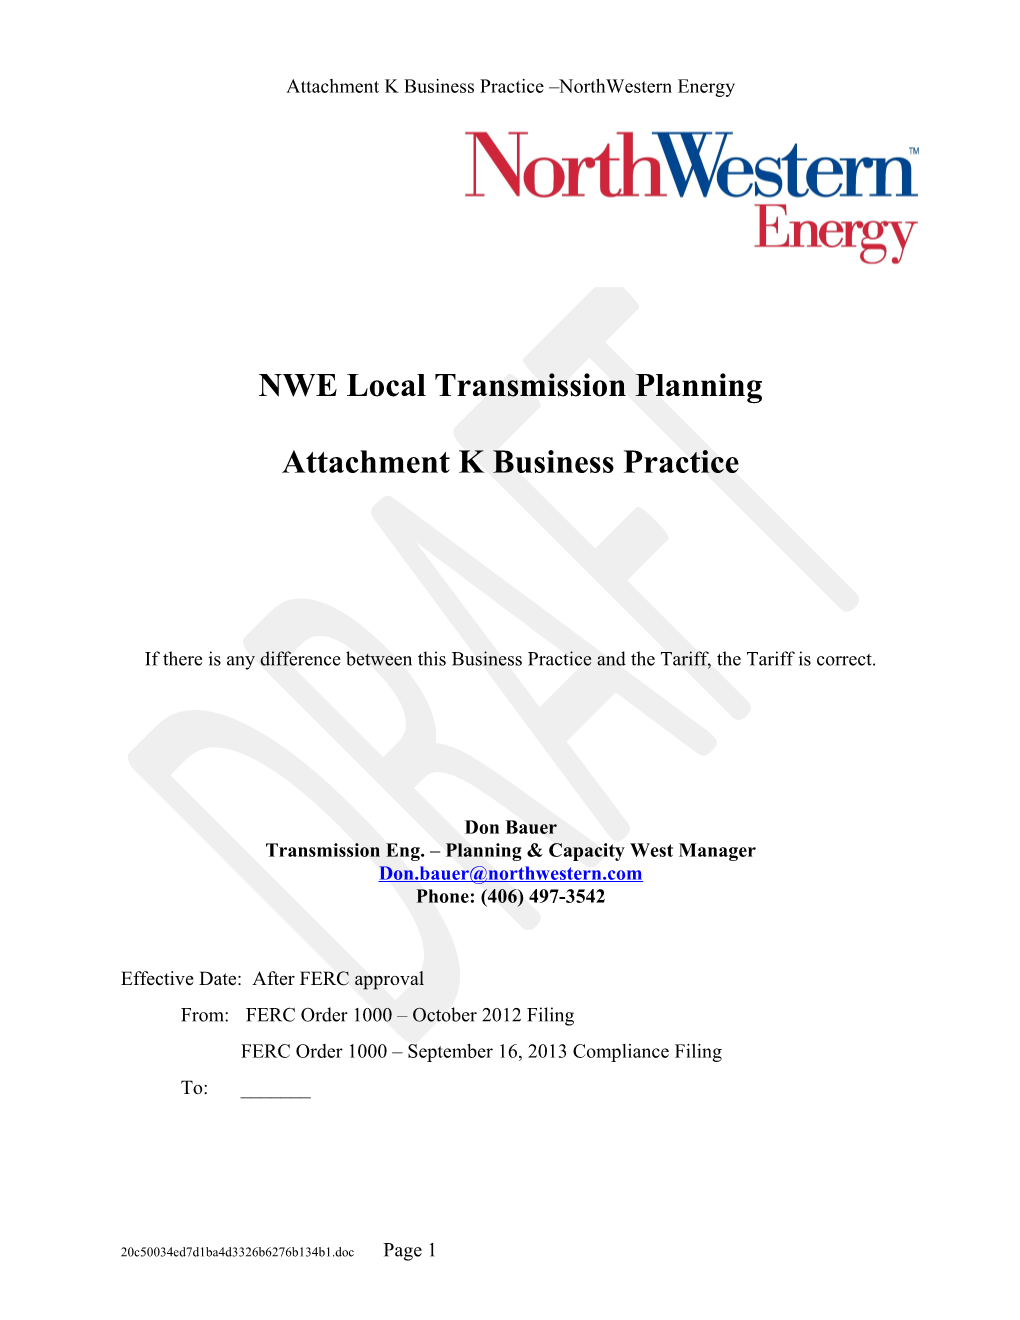 NWE Local Transmission Planning